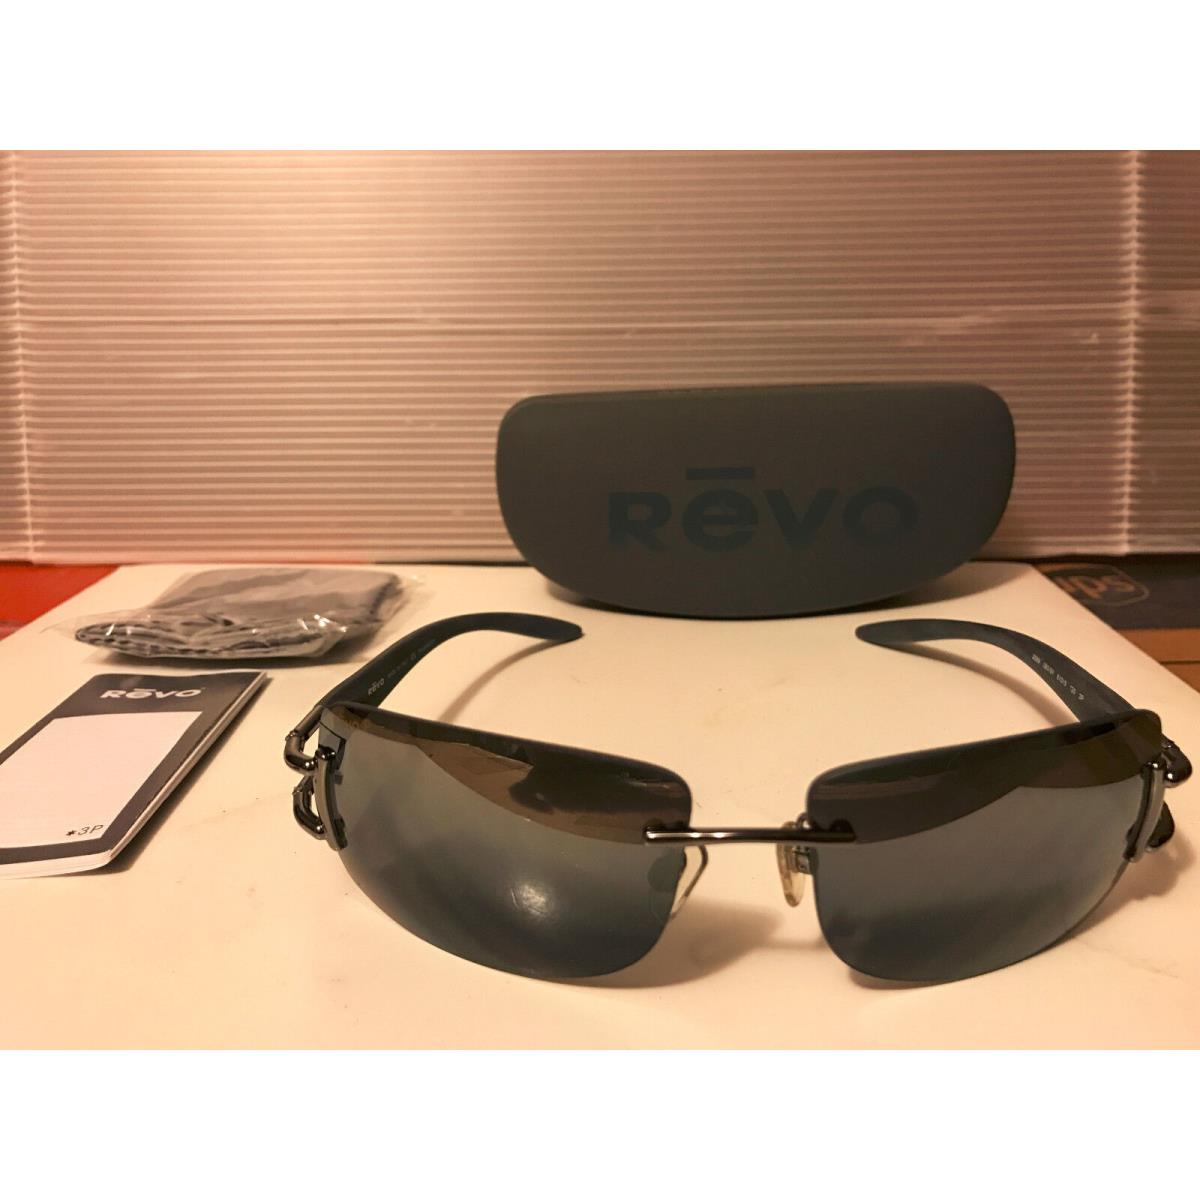 Revo sunglasses  - GUNMETAL Frame, GRAY POLARIZED SILVER MIRROR Lens